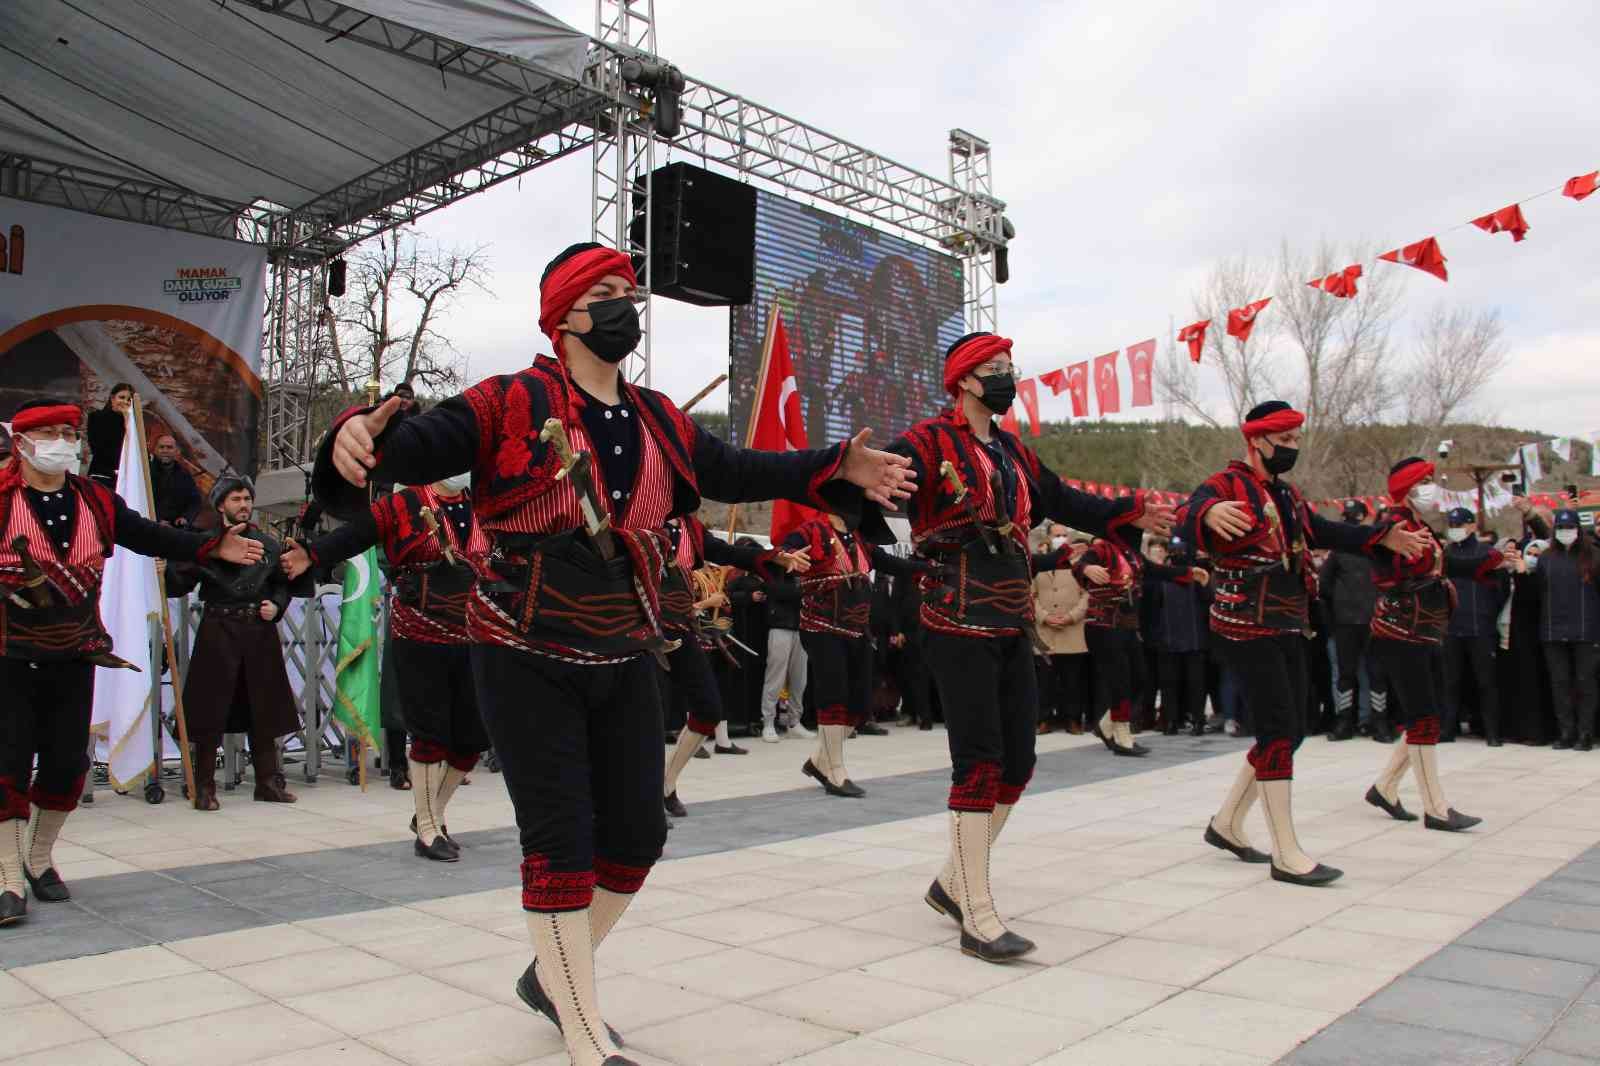 Başkent’te Ankara Döneri Festivali #ankara